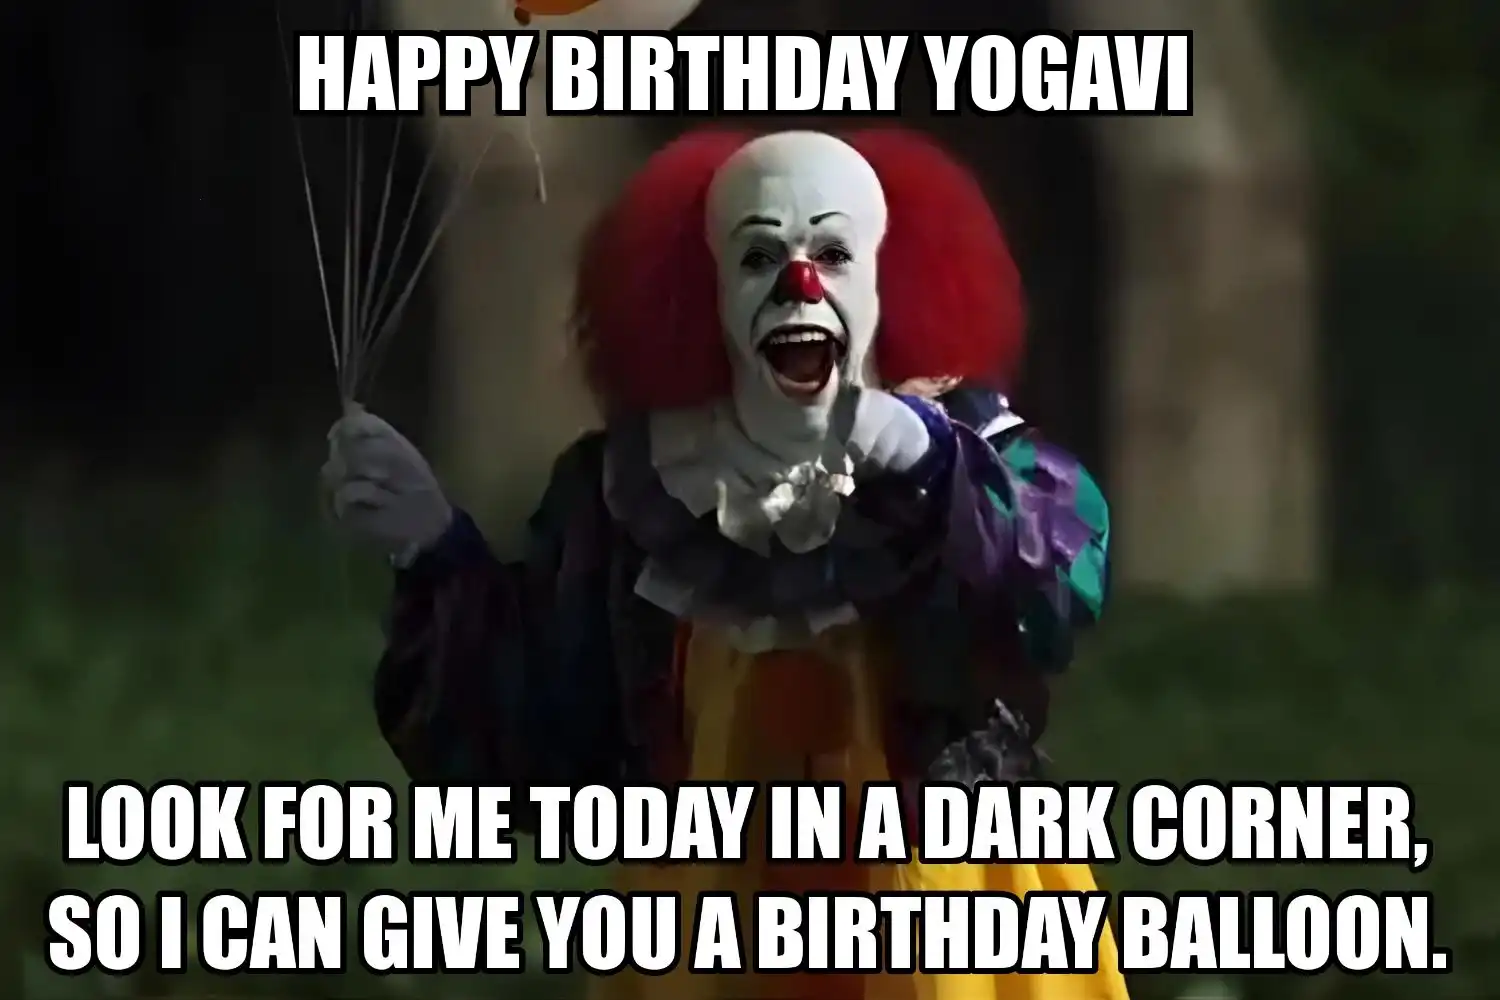 Happy Birthday Yogavi I Can Give You A Balloon Meme